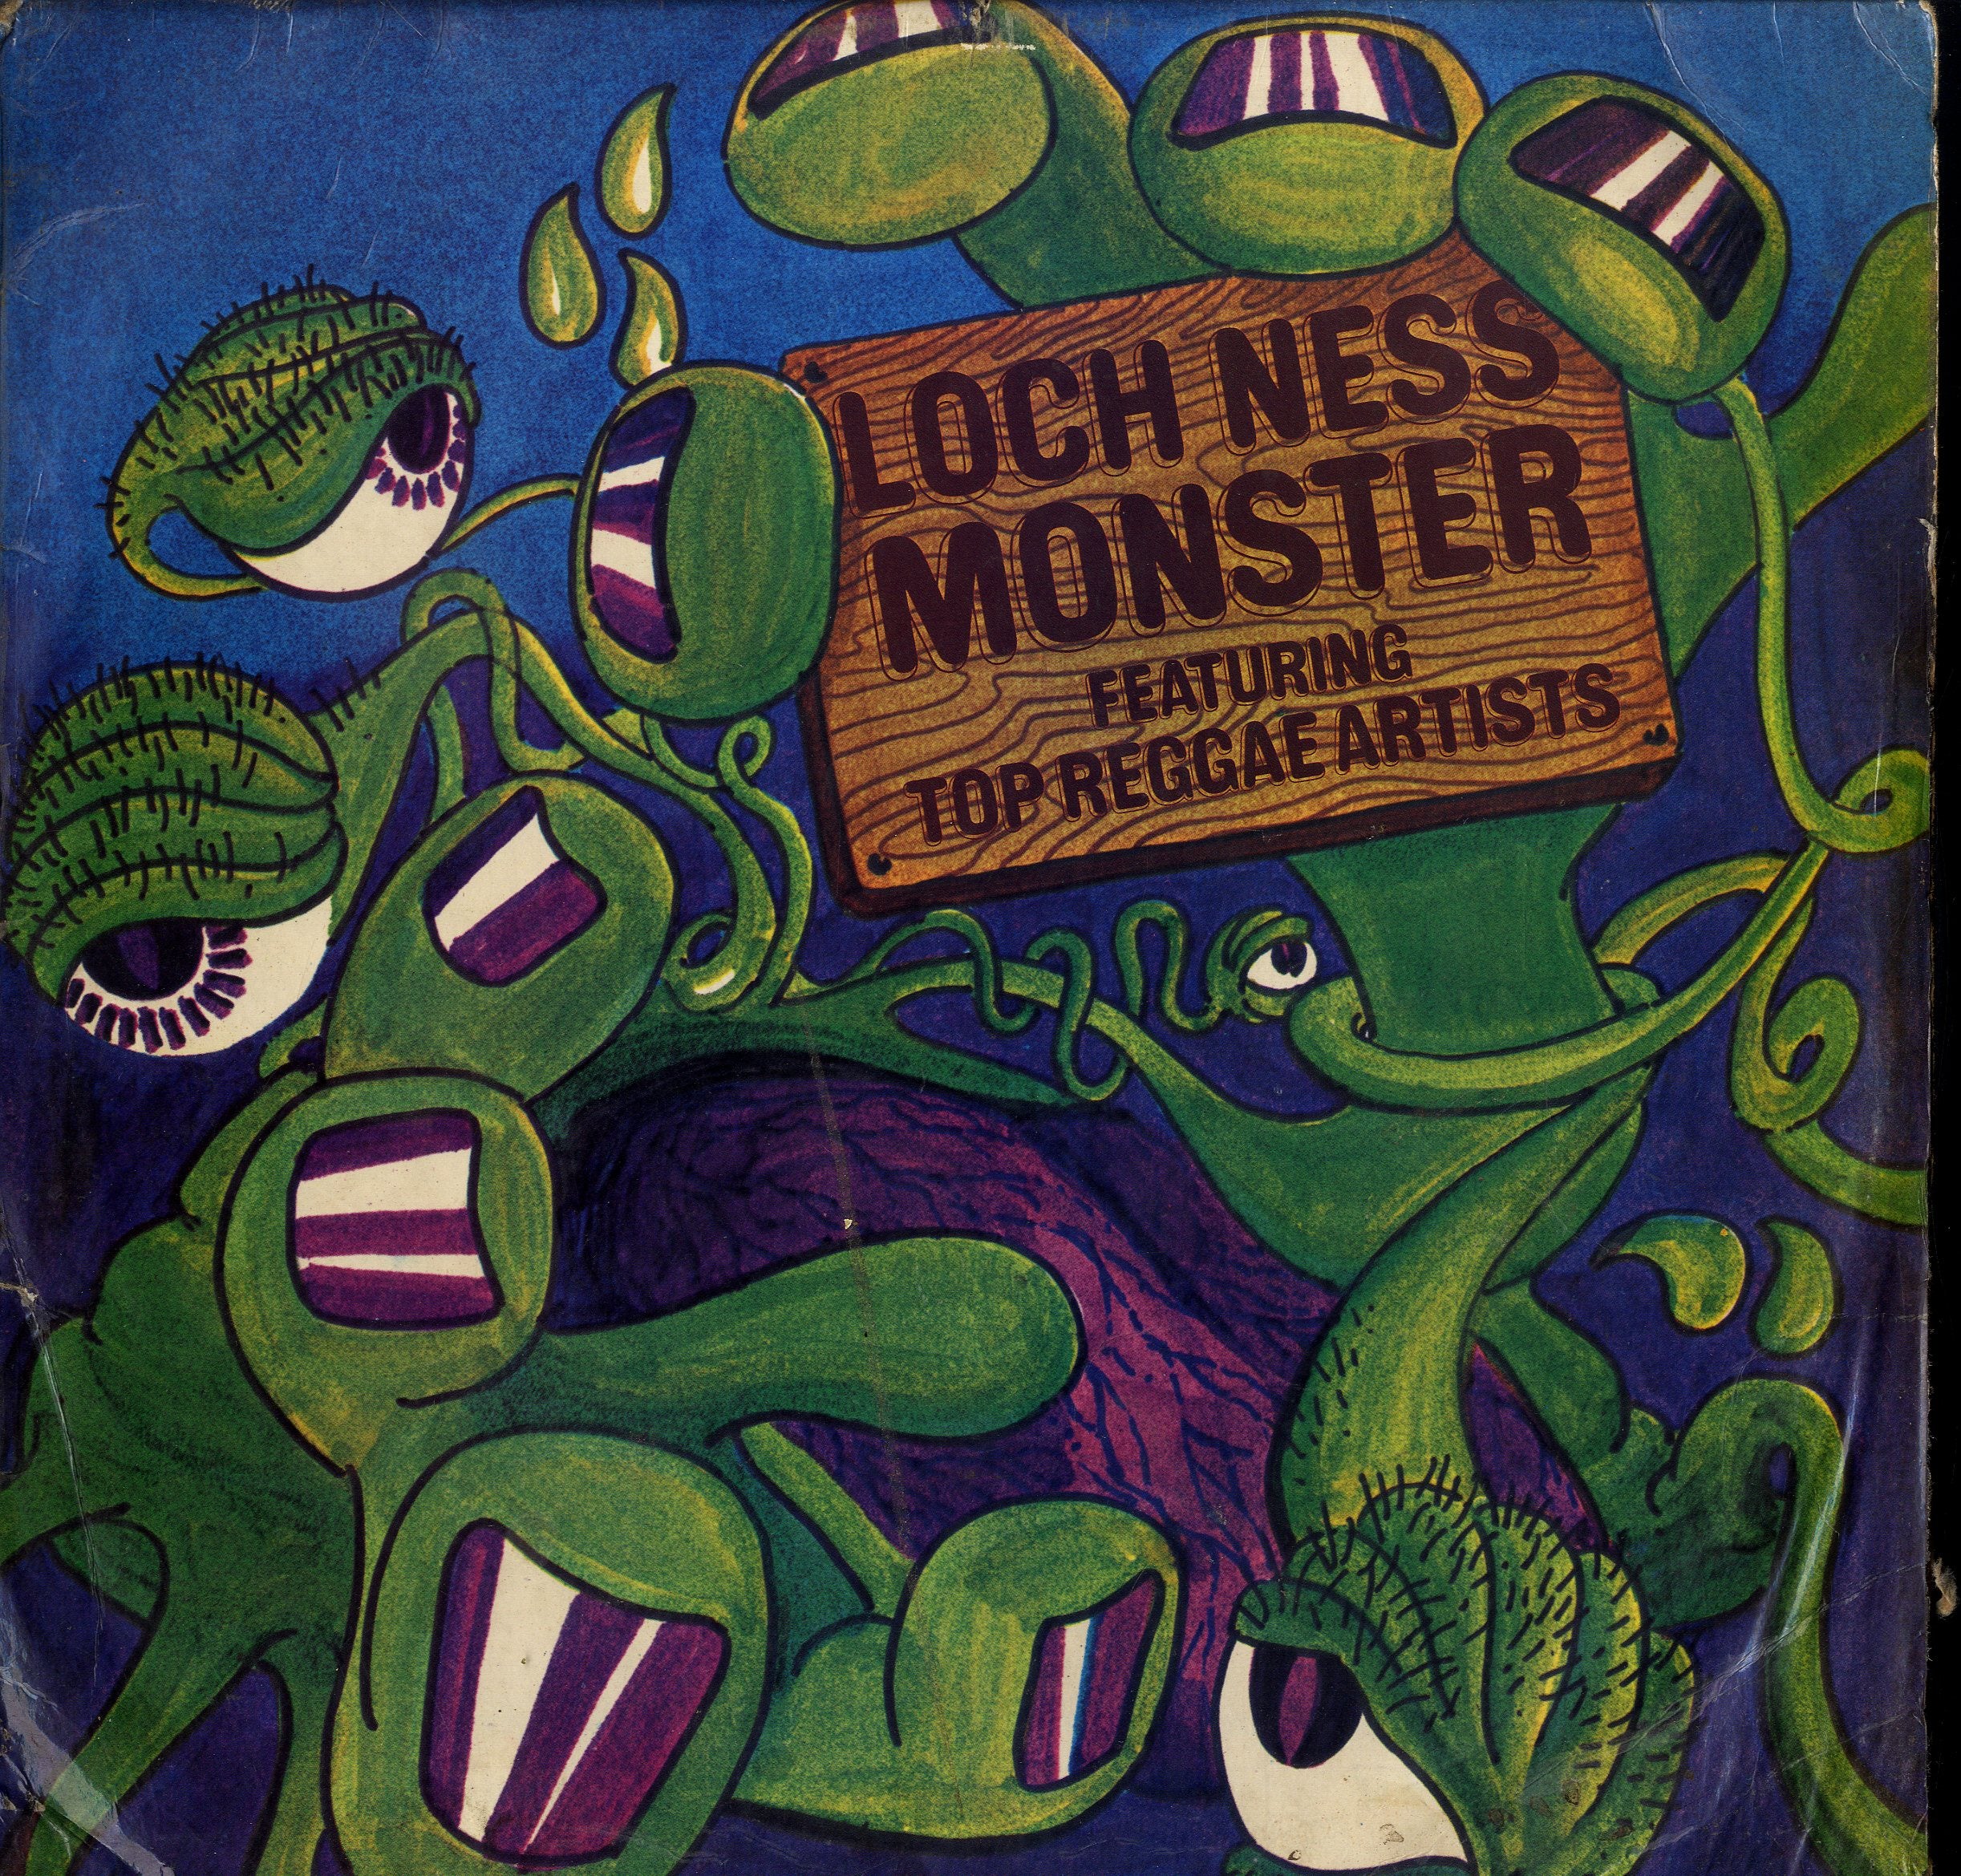 TOP REGGAE ARTISTS [Loch Ness Monster]